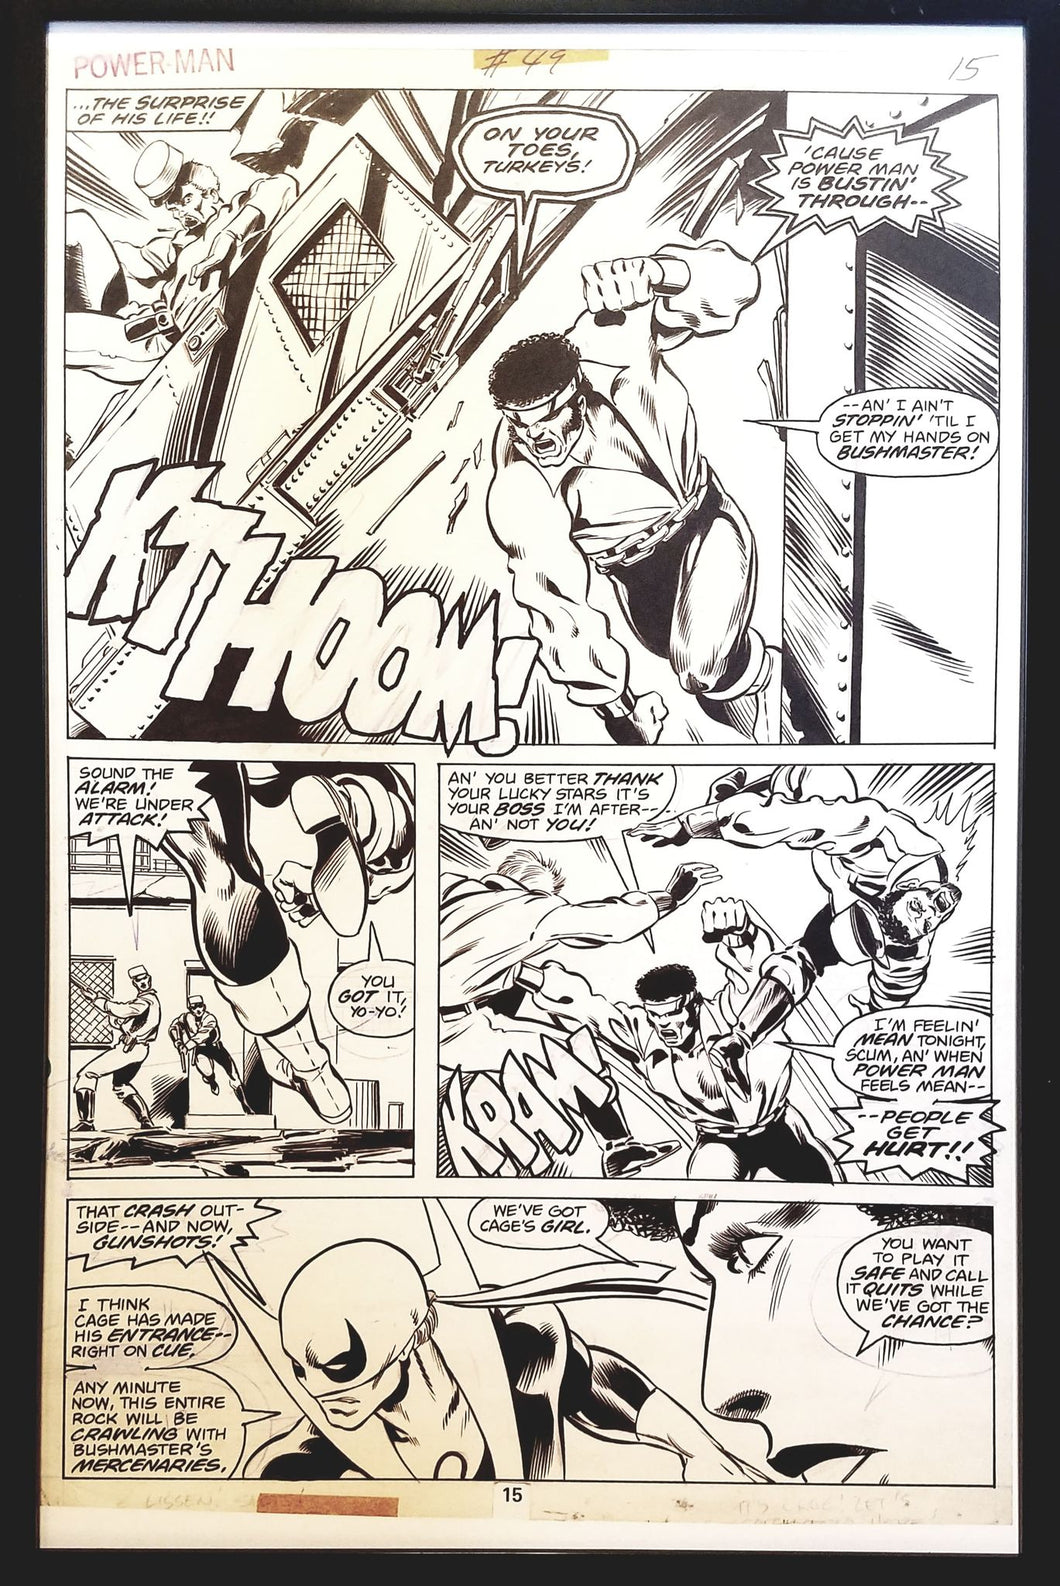 Power Man Iron Fist #49 by John Byrne 11x17 FRAMED Original Art Poster Marvel Comics